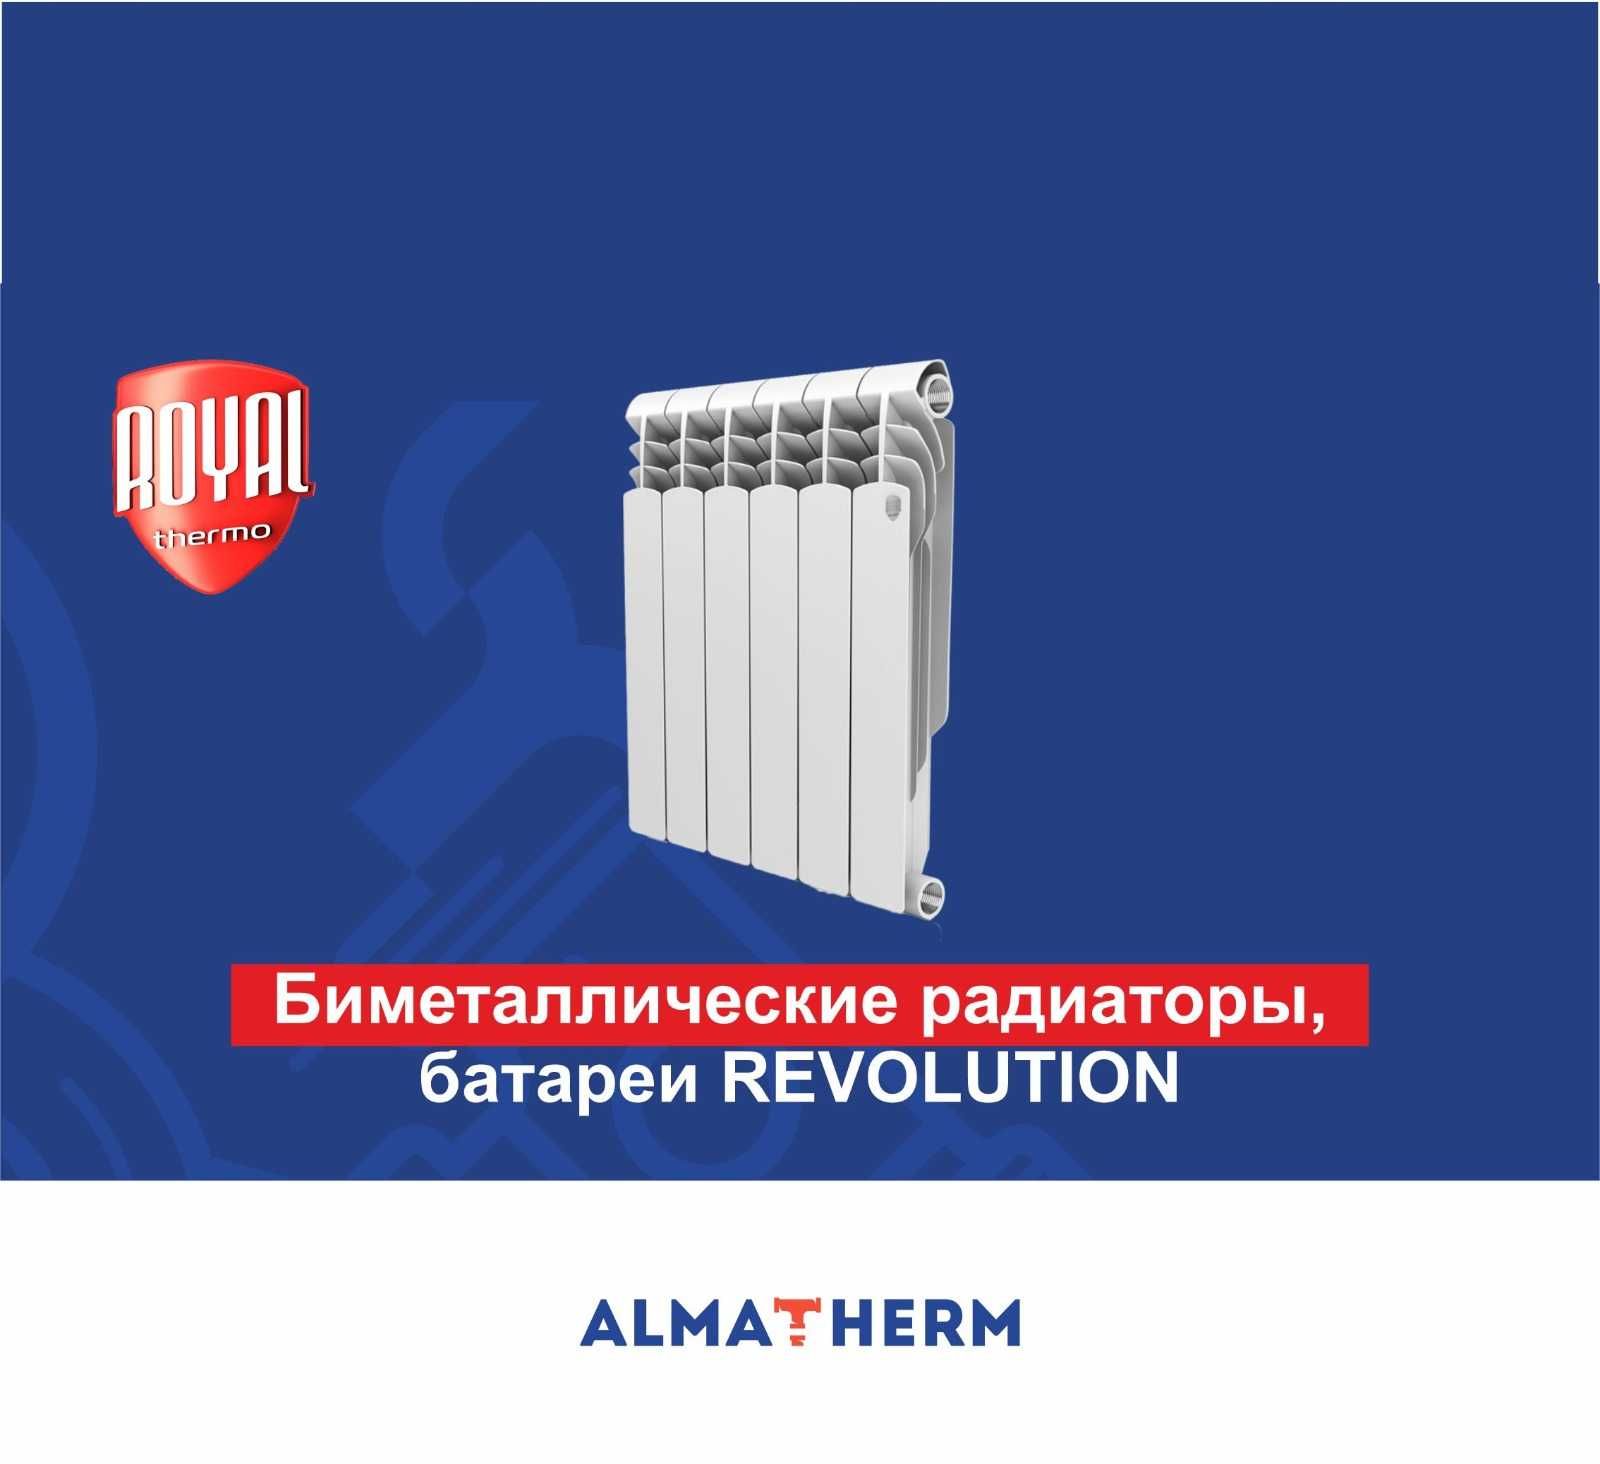 Биметаллические радиаторы, батареи Revolution